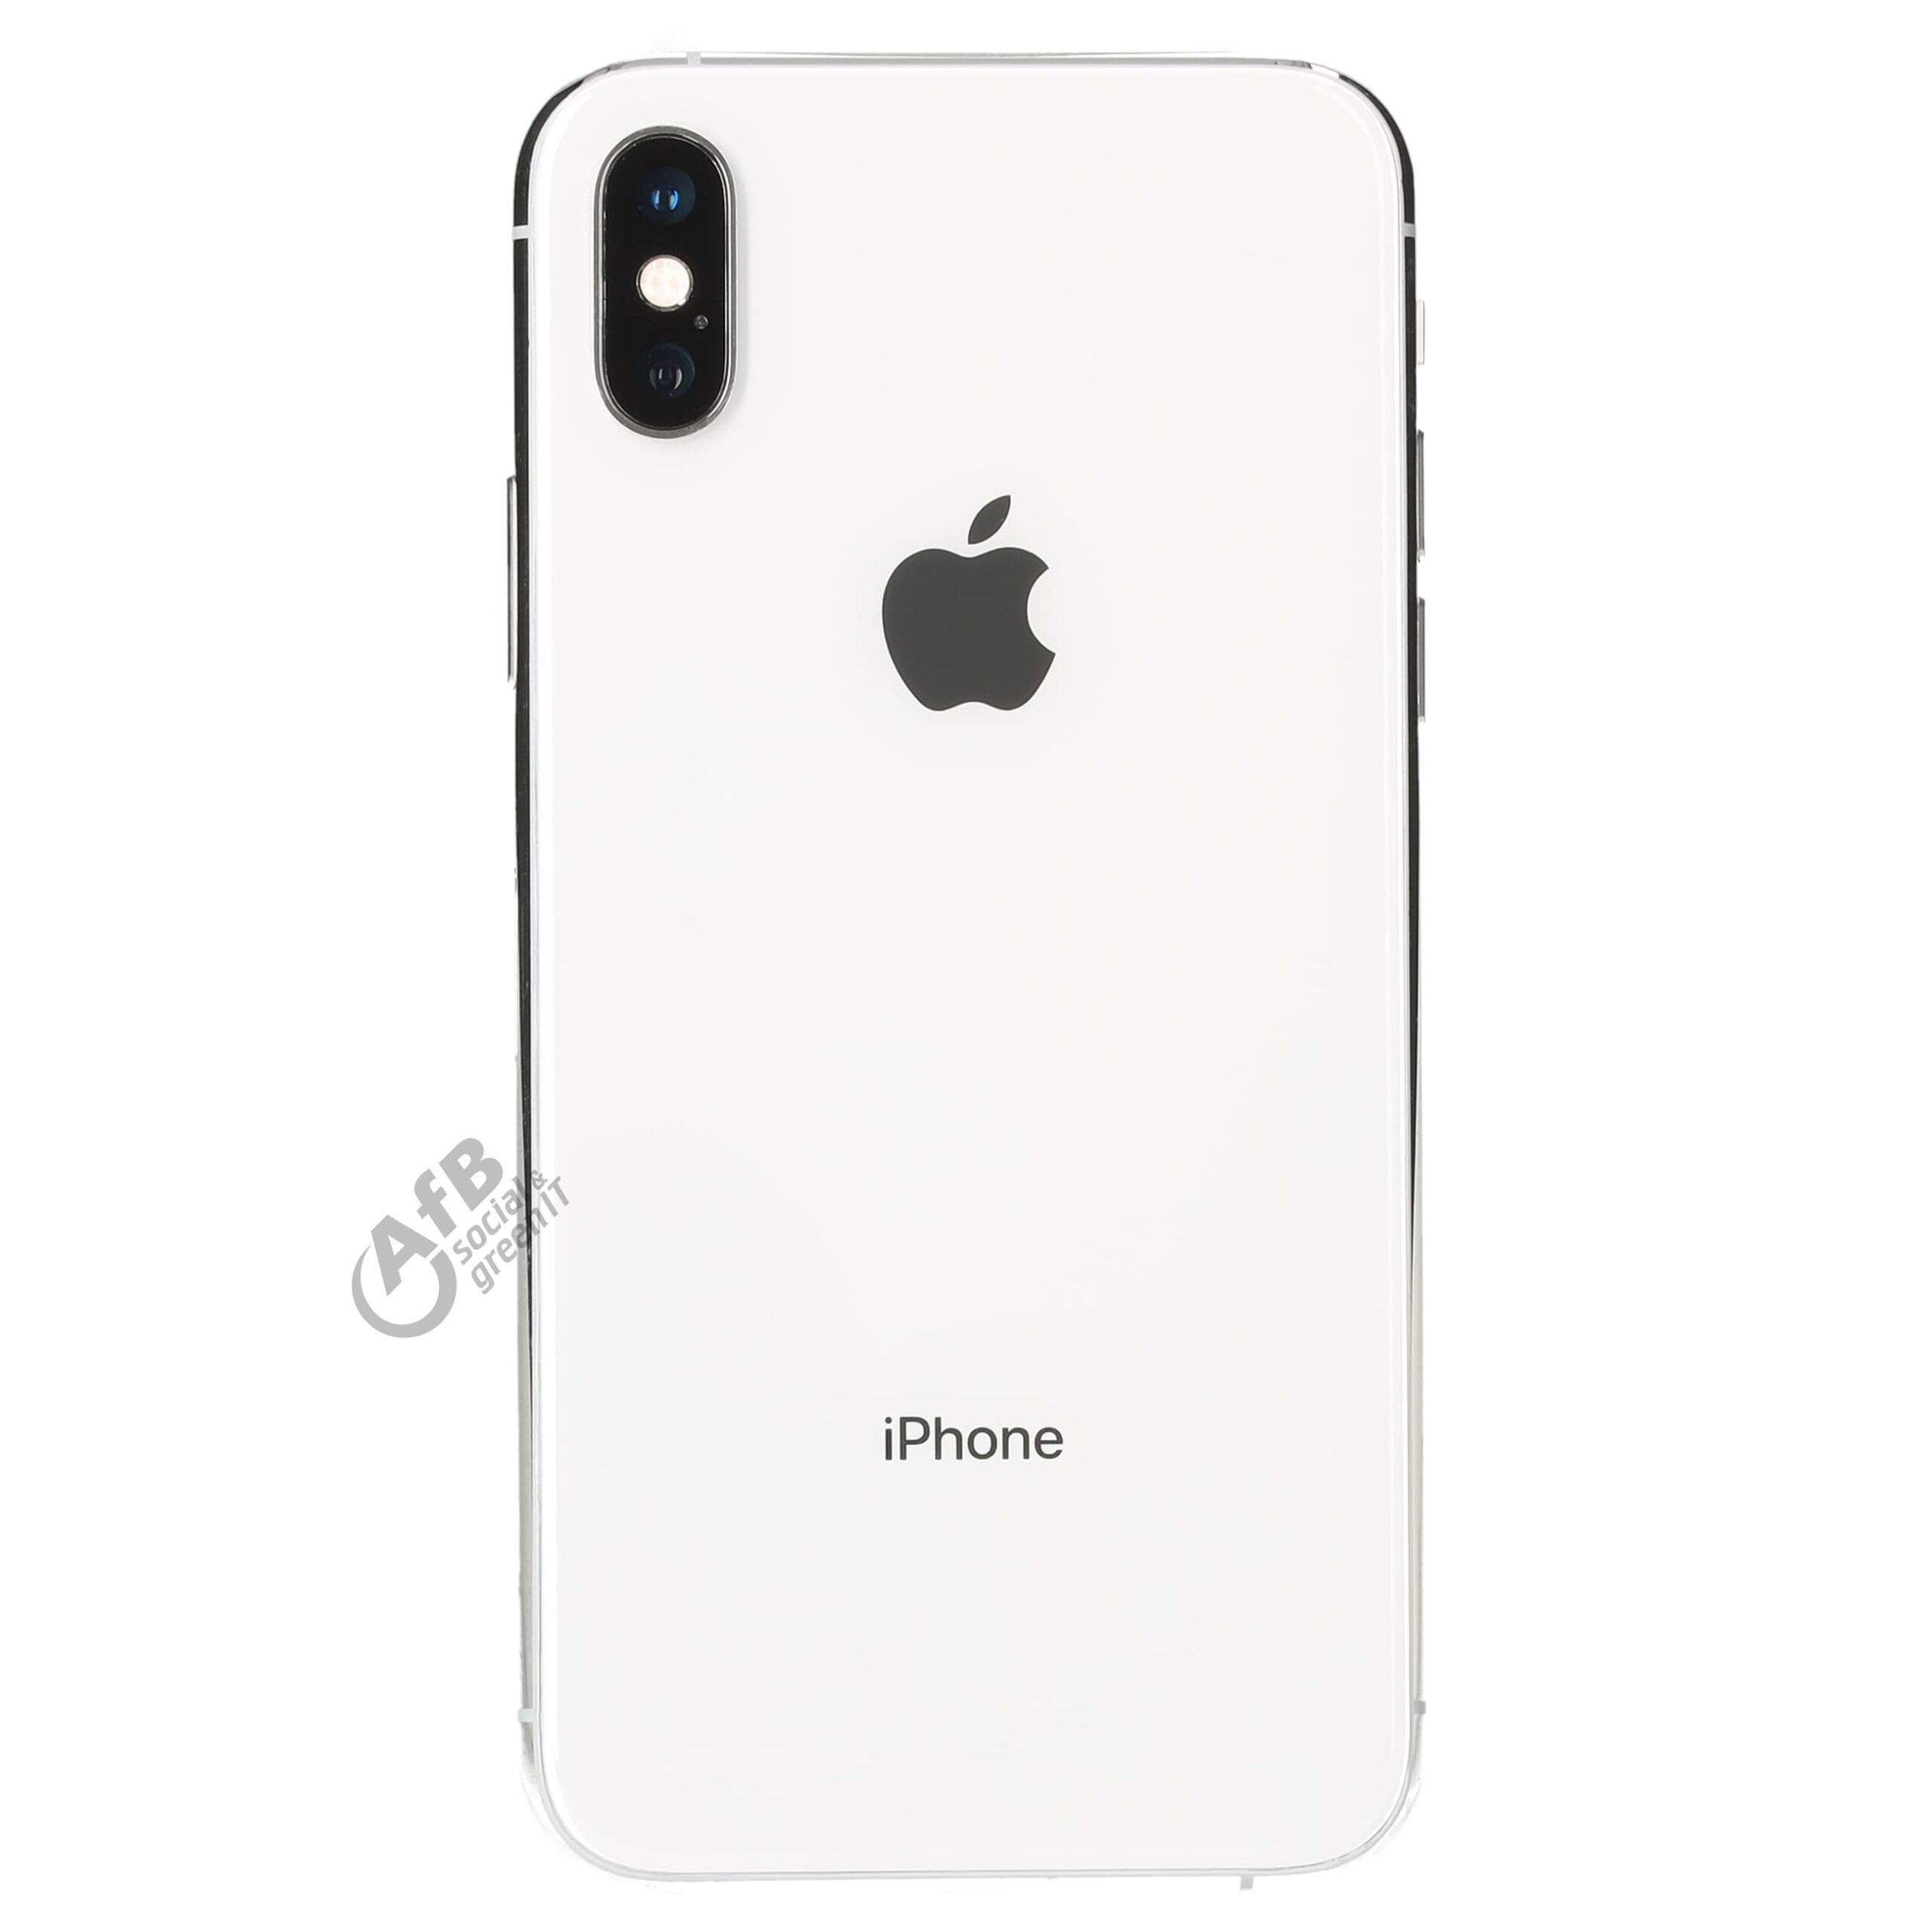 Apple iPhone XSGut – AfB-refurbished